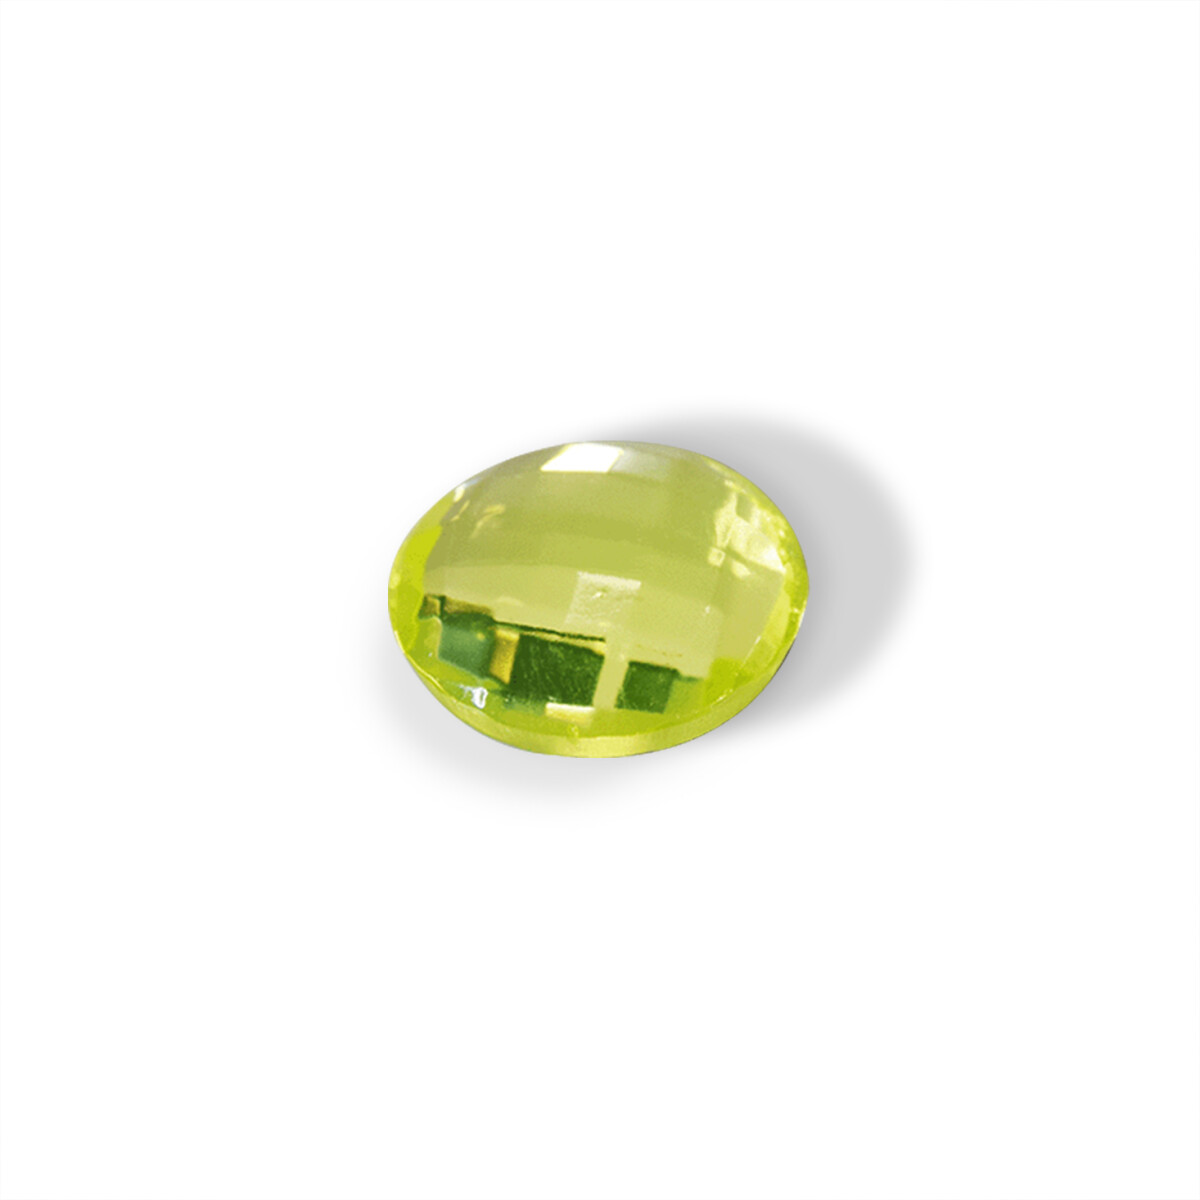 Uranglas Würfel Uranium glass 50 Gr 27x27x27 mm - Prüfstrahler Geigerzähler 